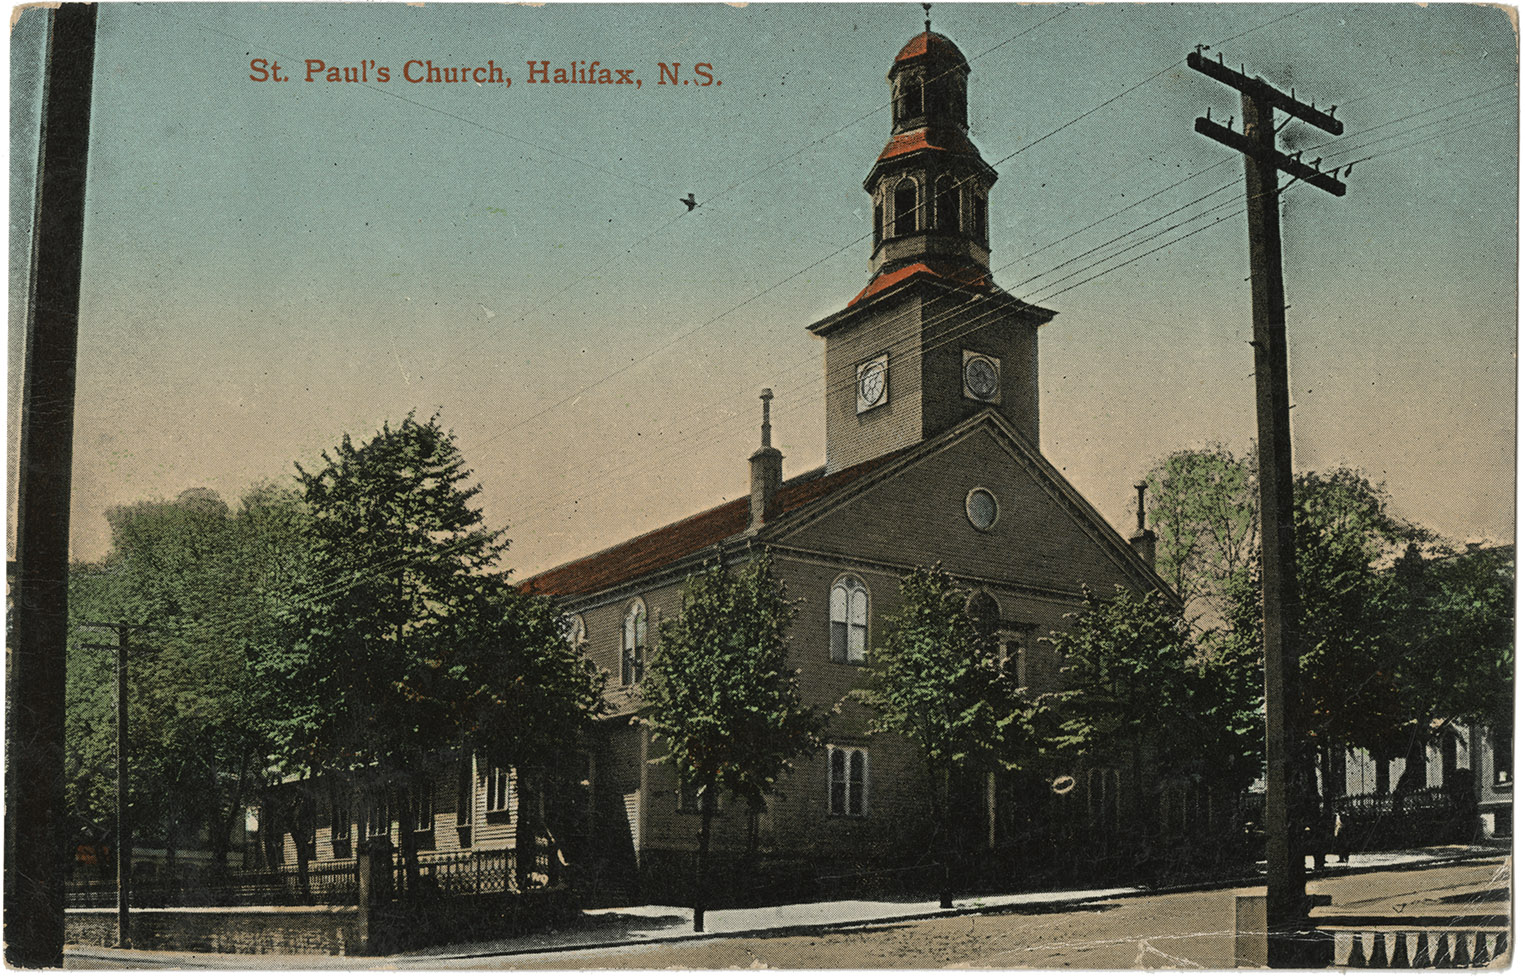 communityalbums - St. Paul’s Church, Halifax, N.S.